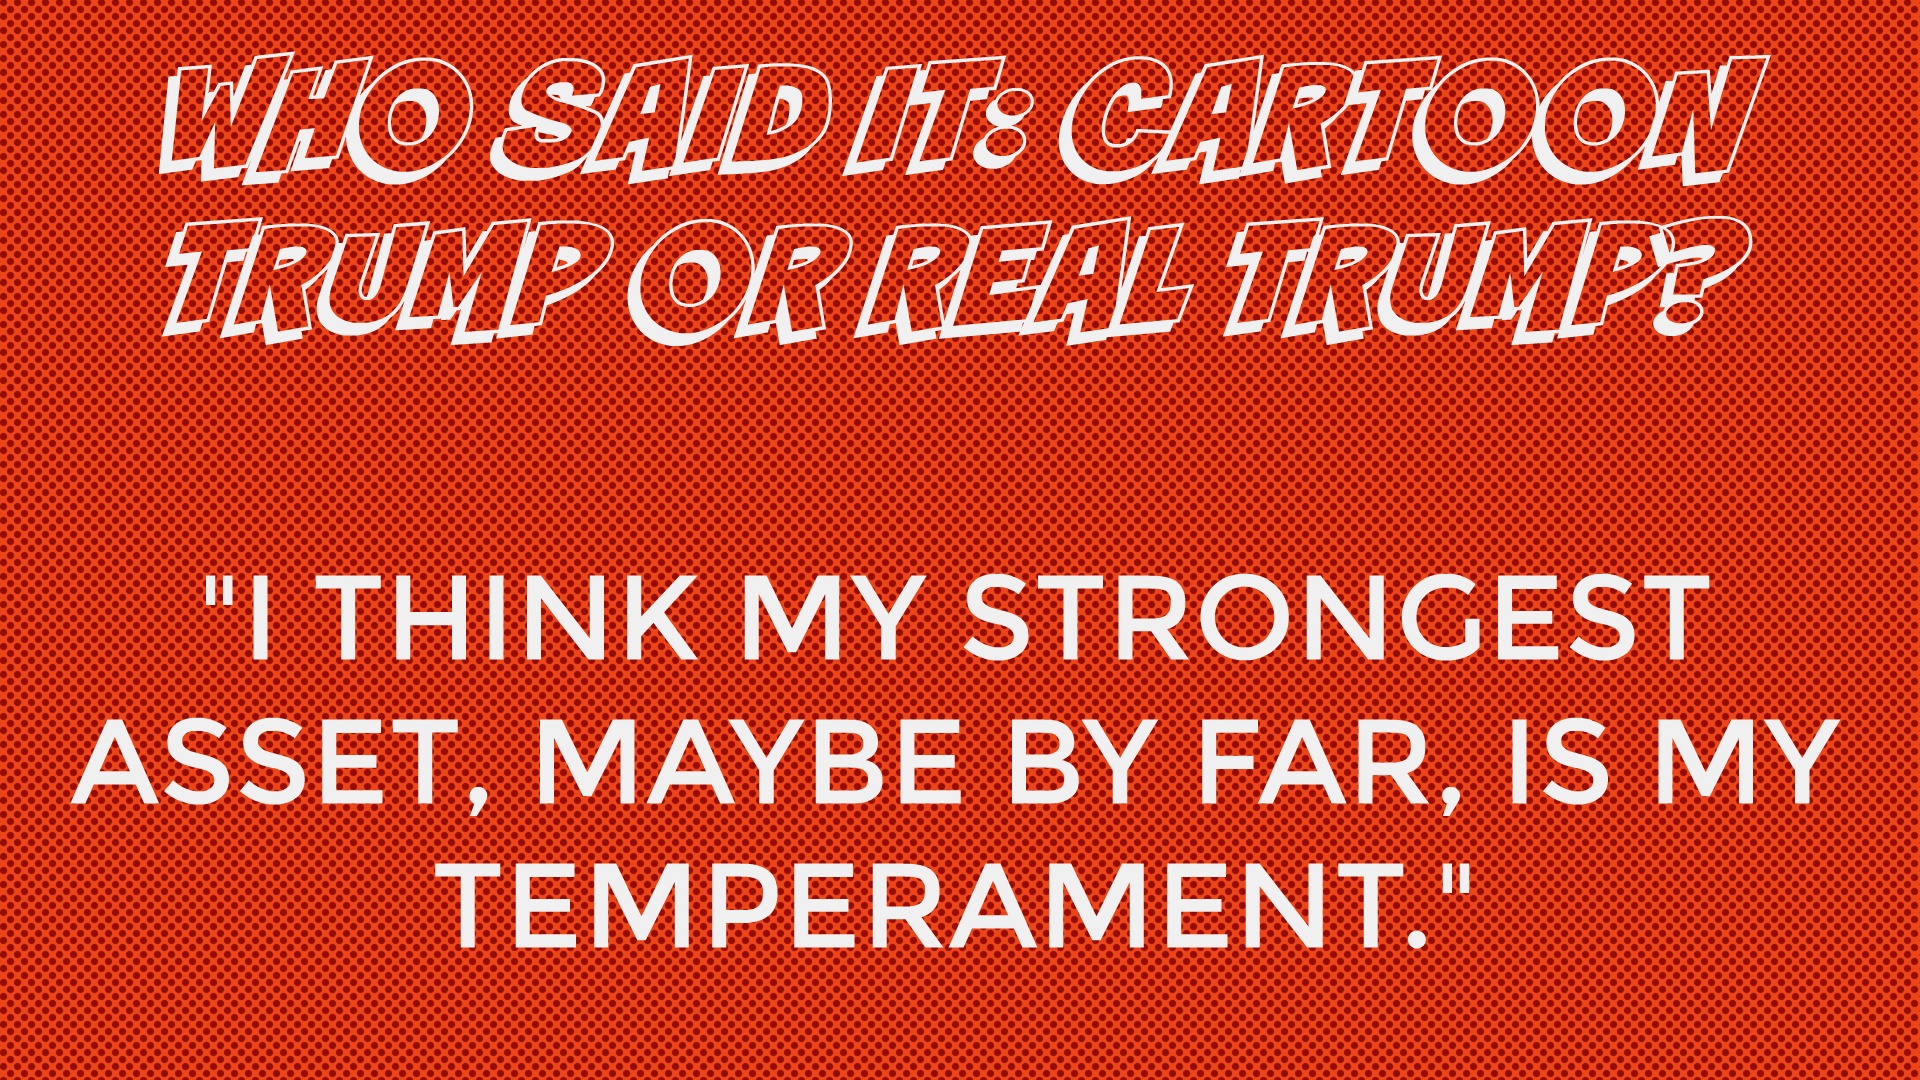 Who said it: Cartoon Trump or Real Trump?